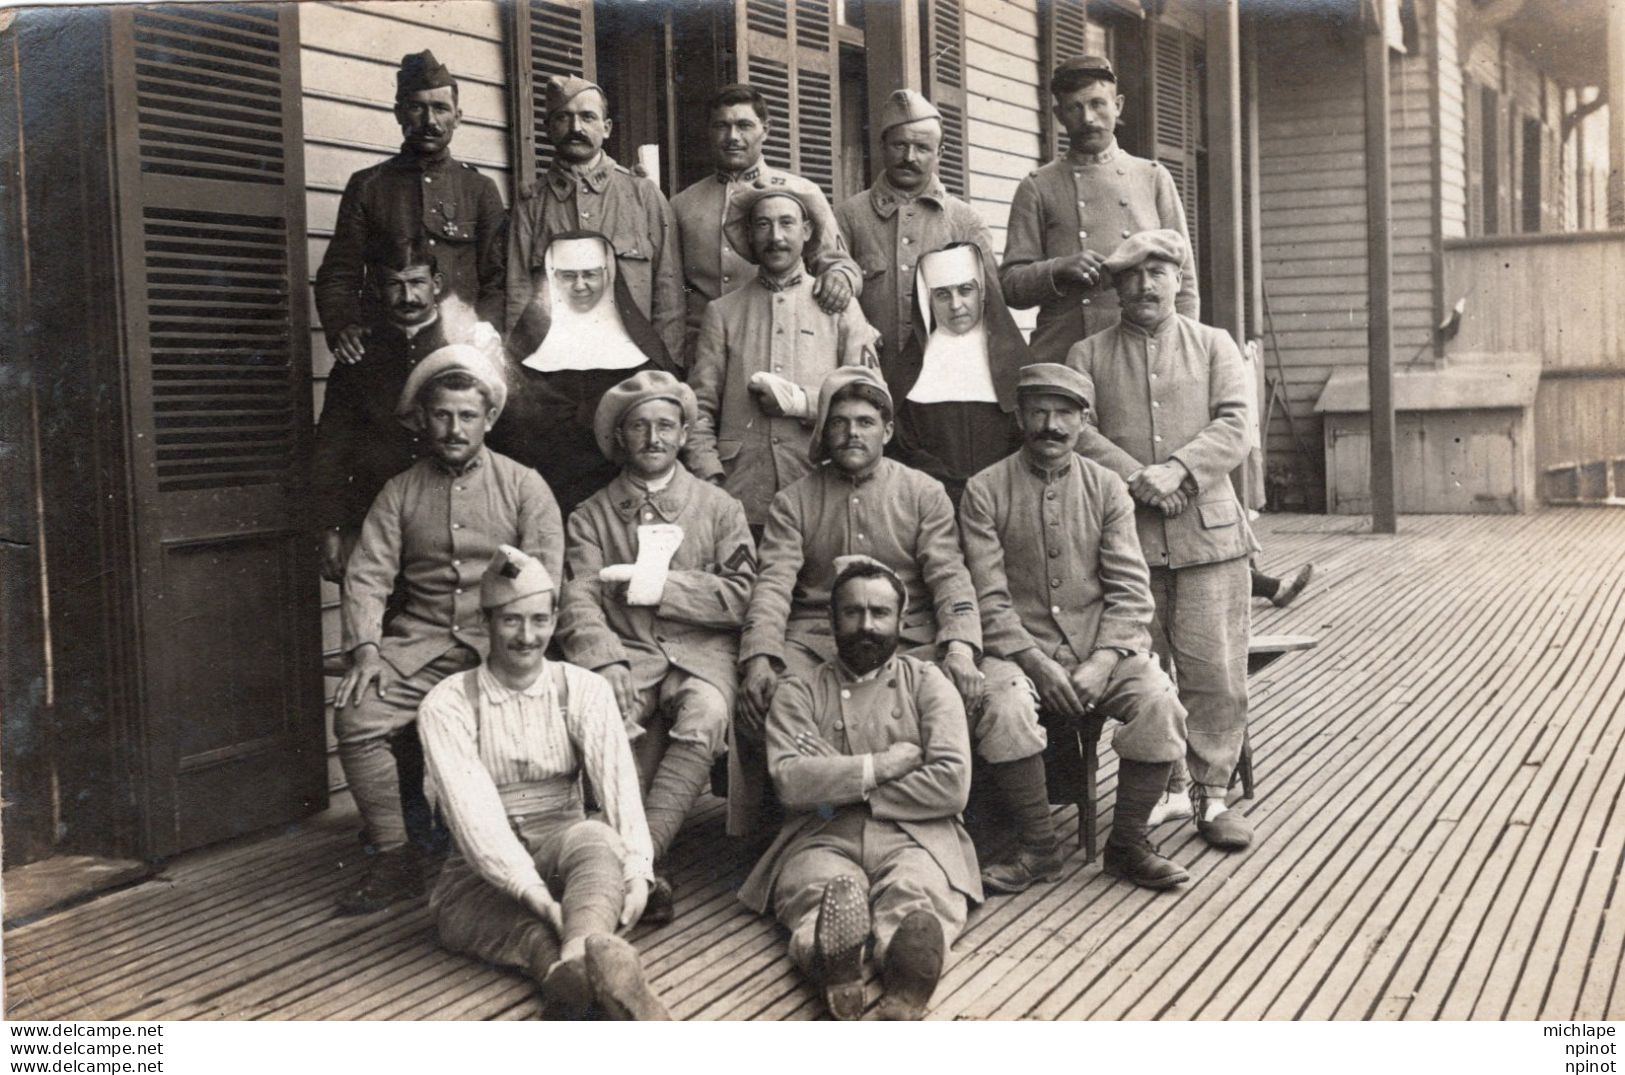 CPA  -THEME 14 / 18 - CARTE PHOTO -   Groupe De Militaires - War 1914-18